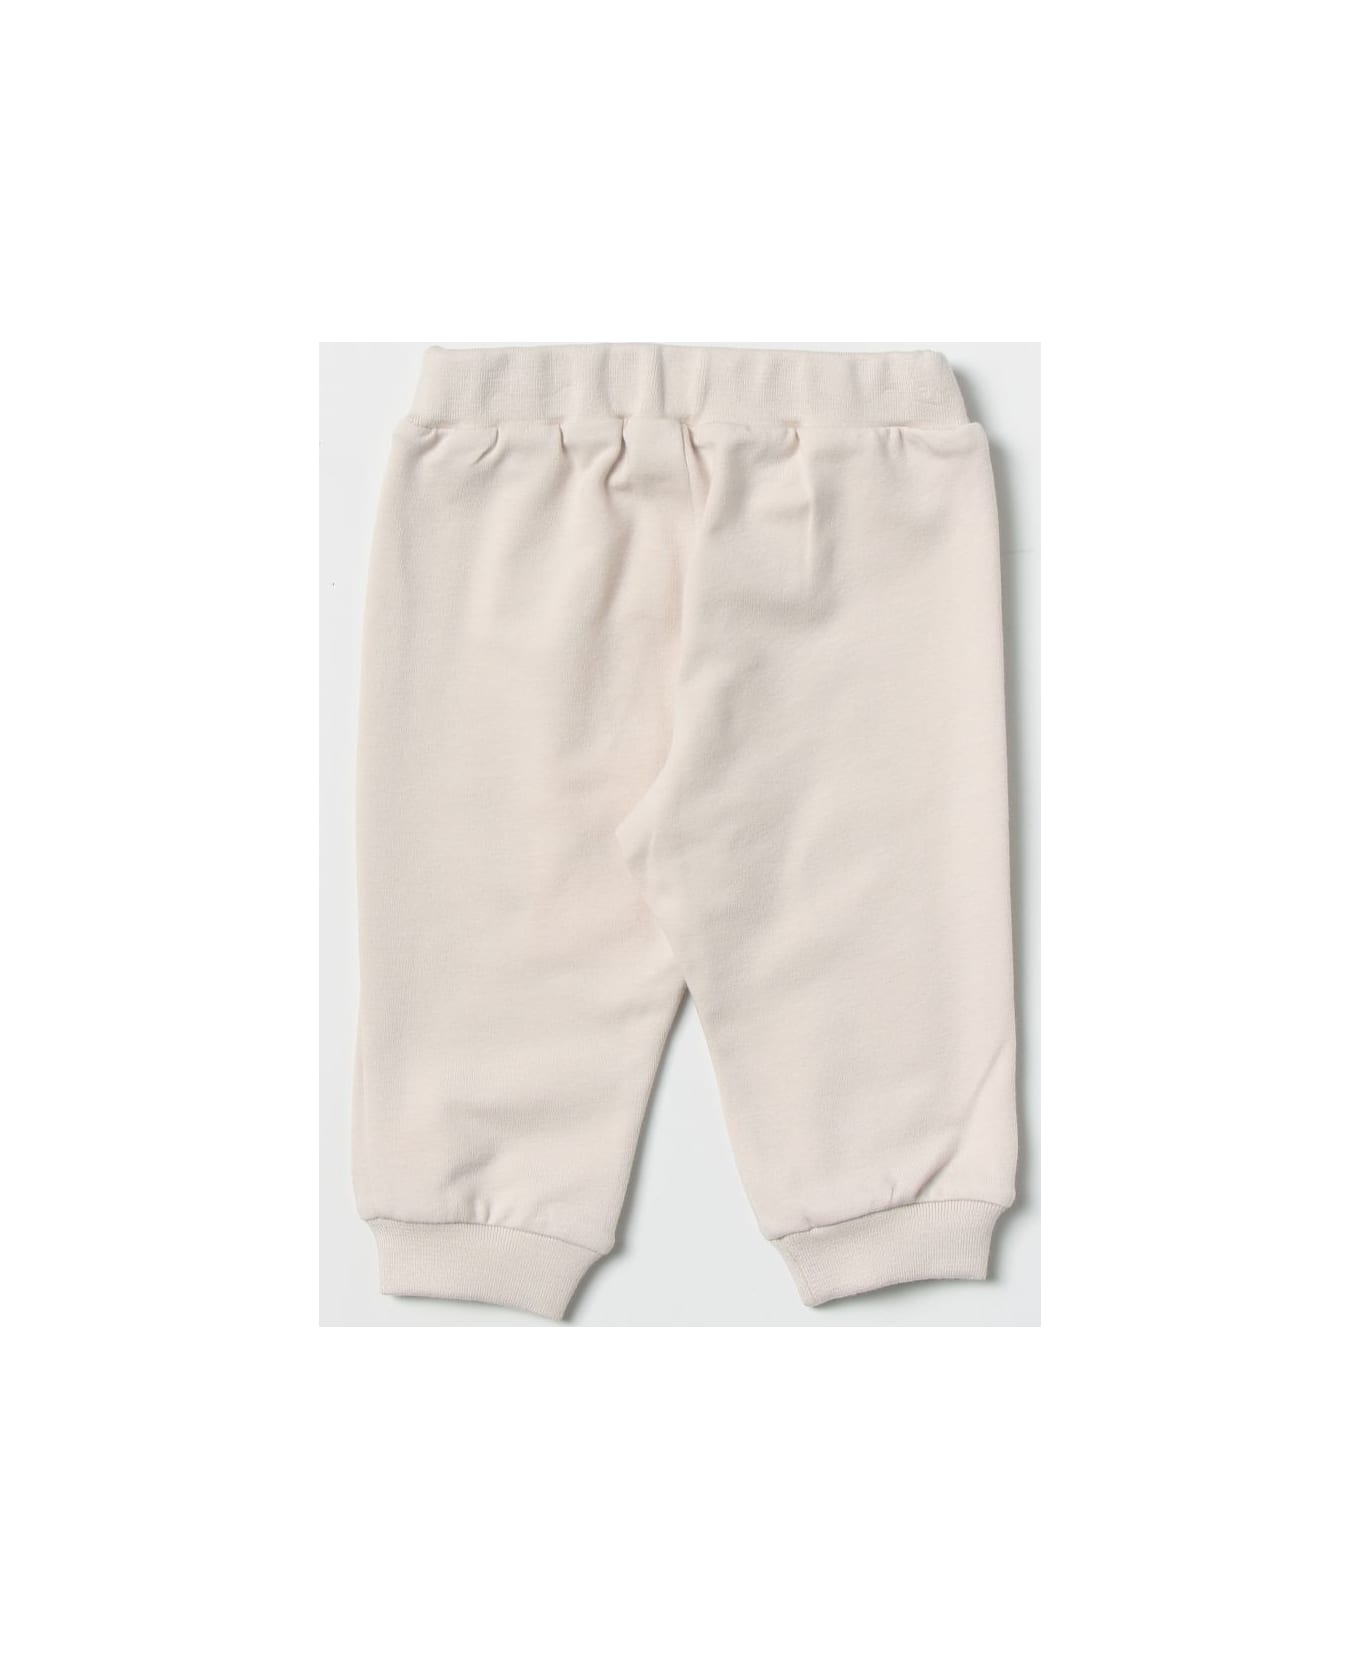 Fendi Trousers With Logo - Beige ボトムス